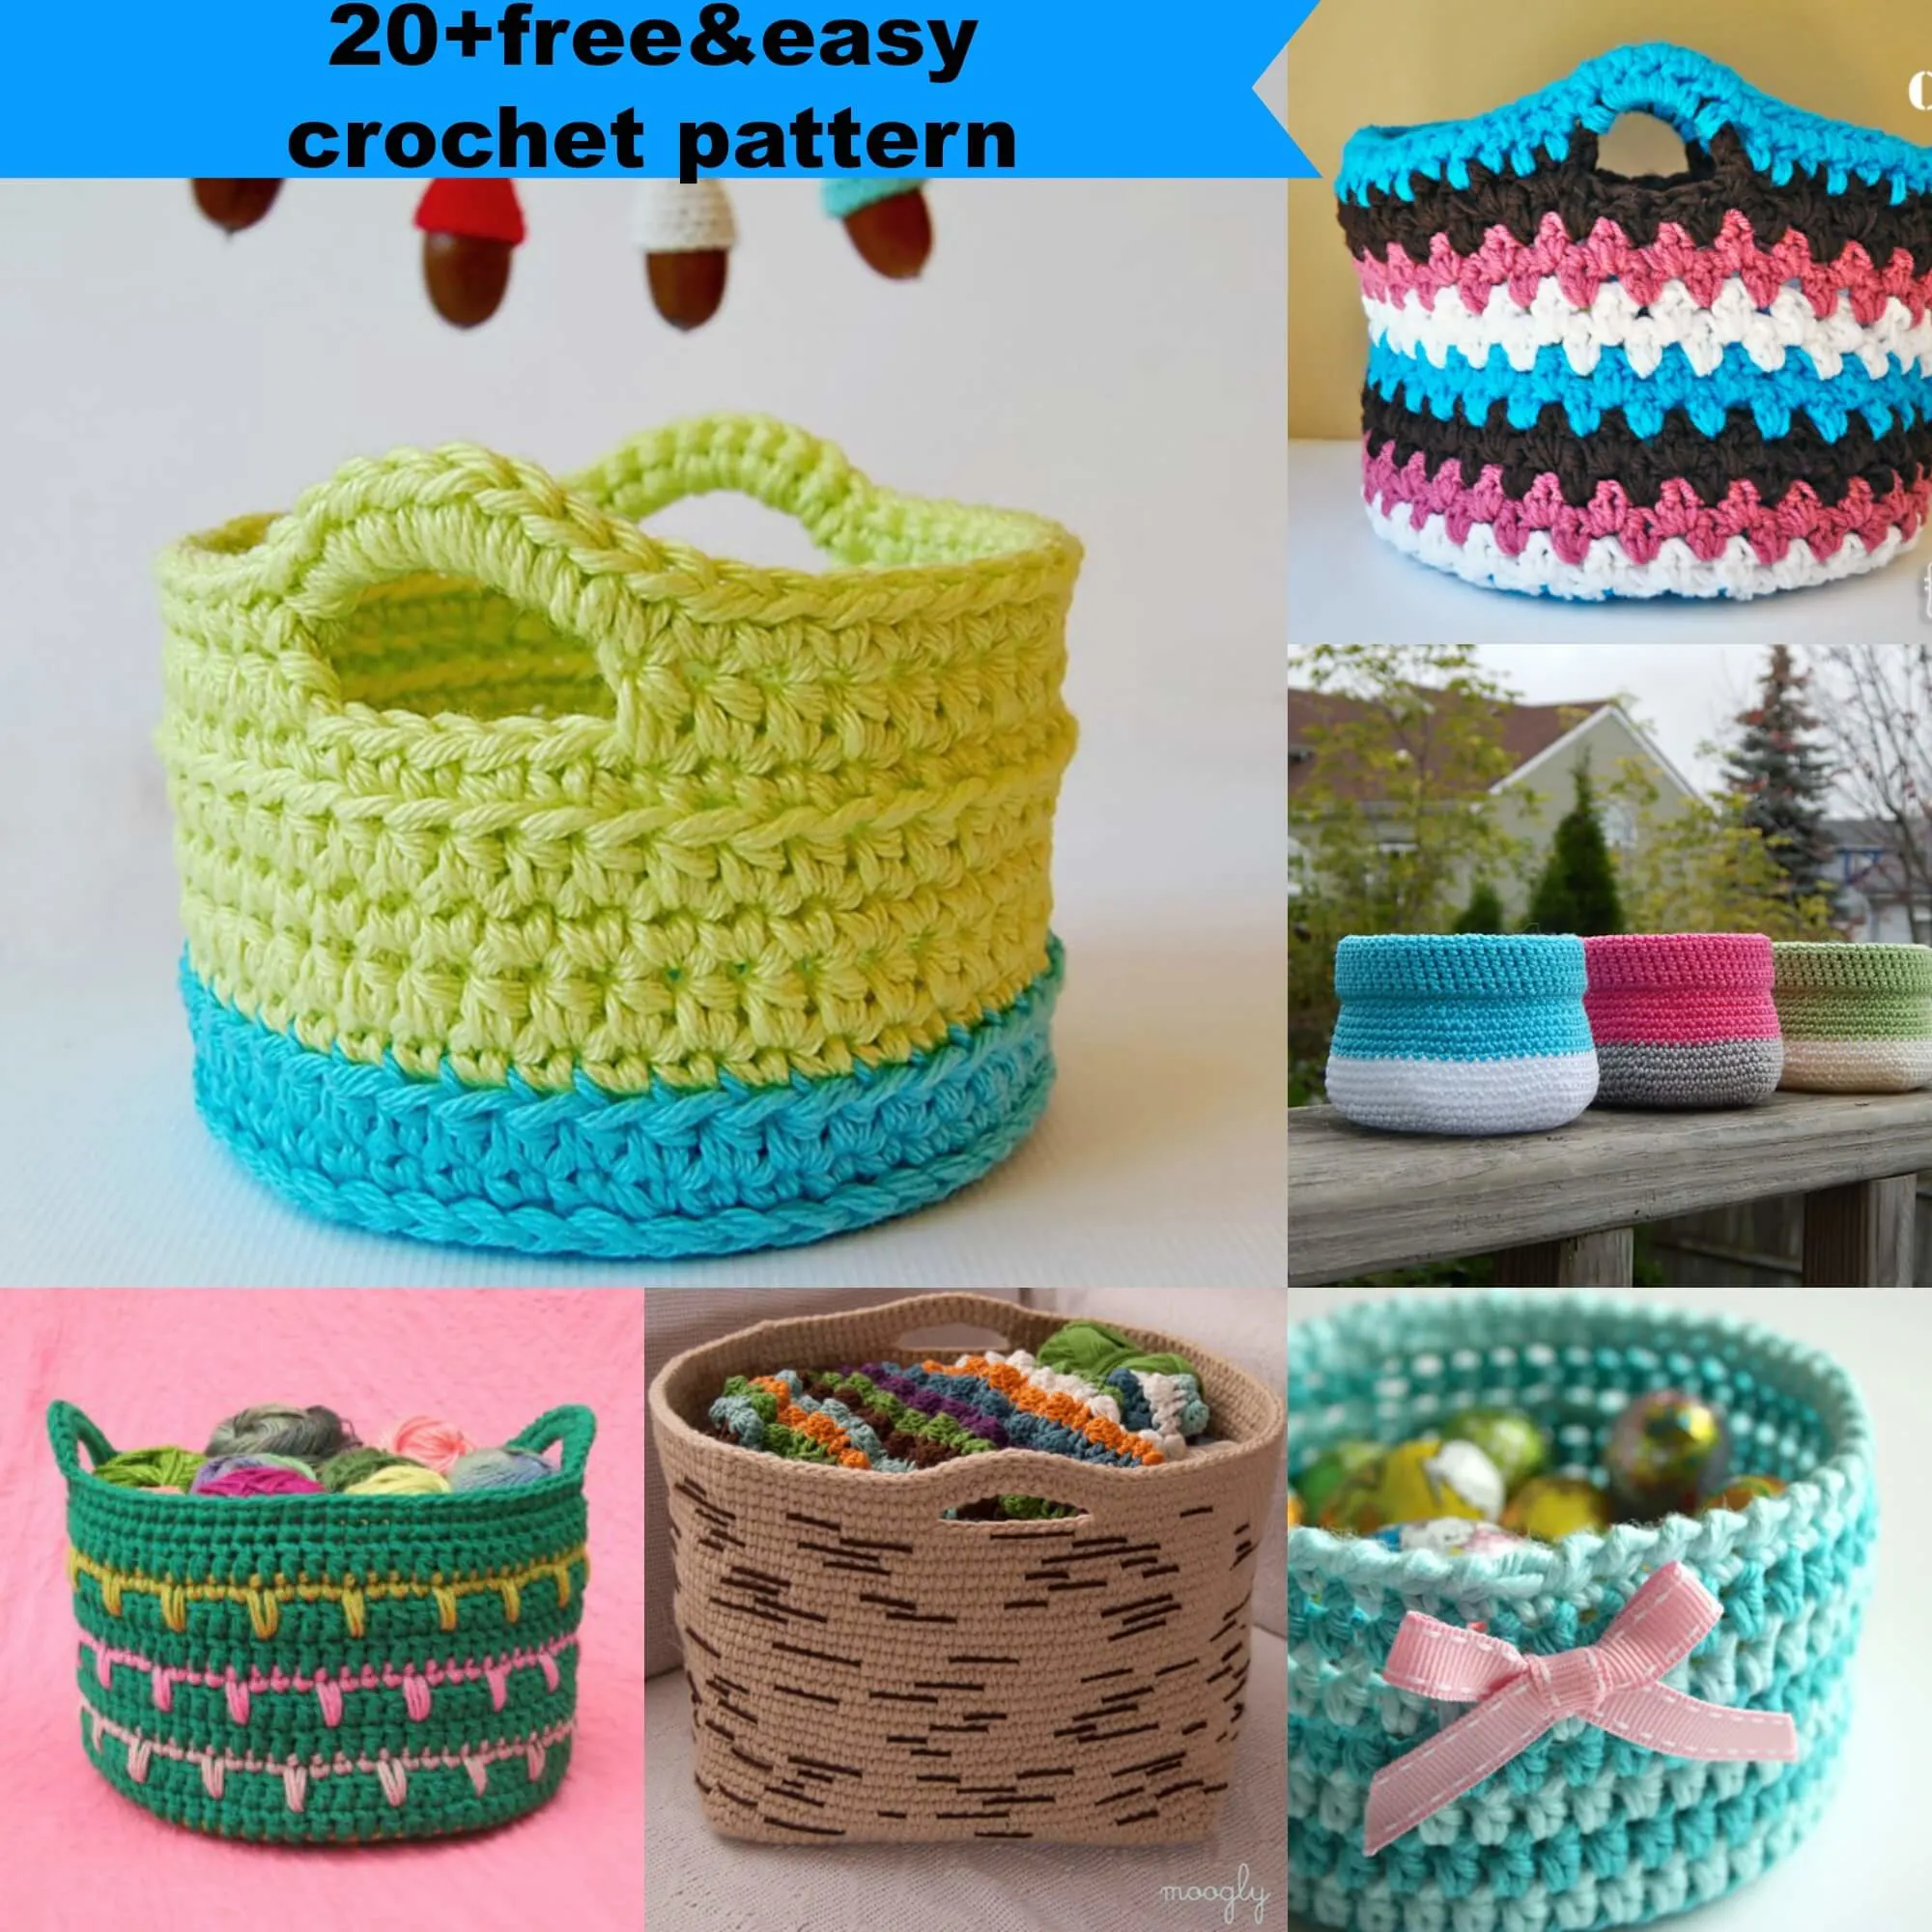 Crochet Basket Tutorial for Beginners - How to Make a DIY Crochet Basket